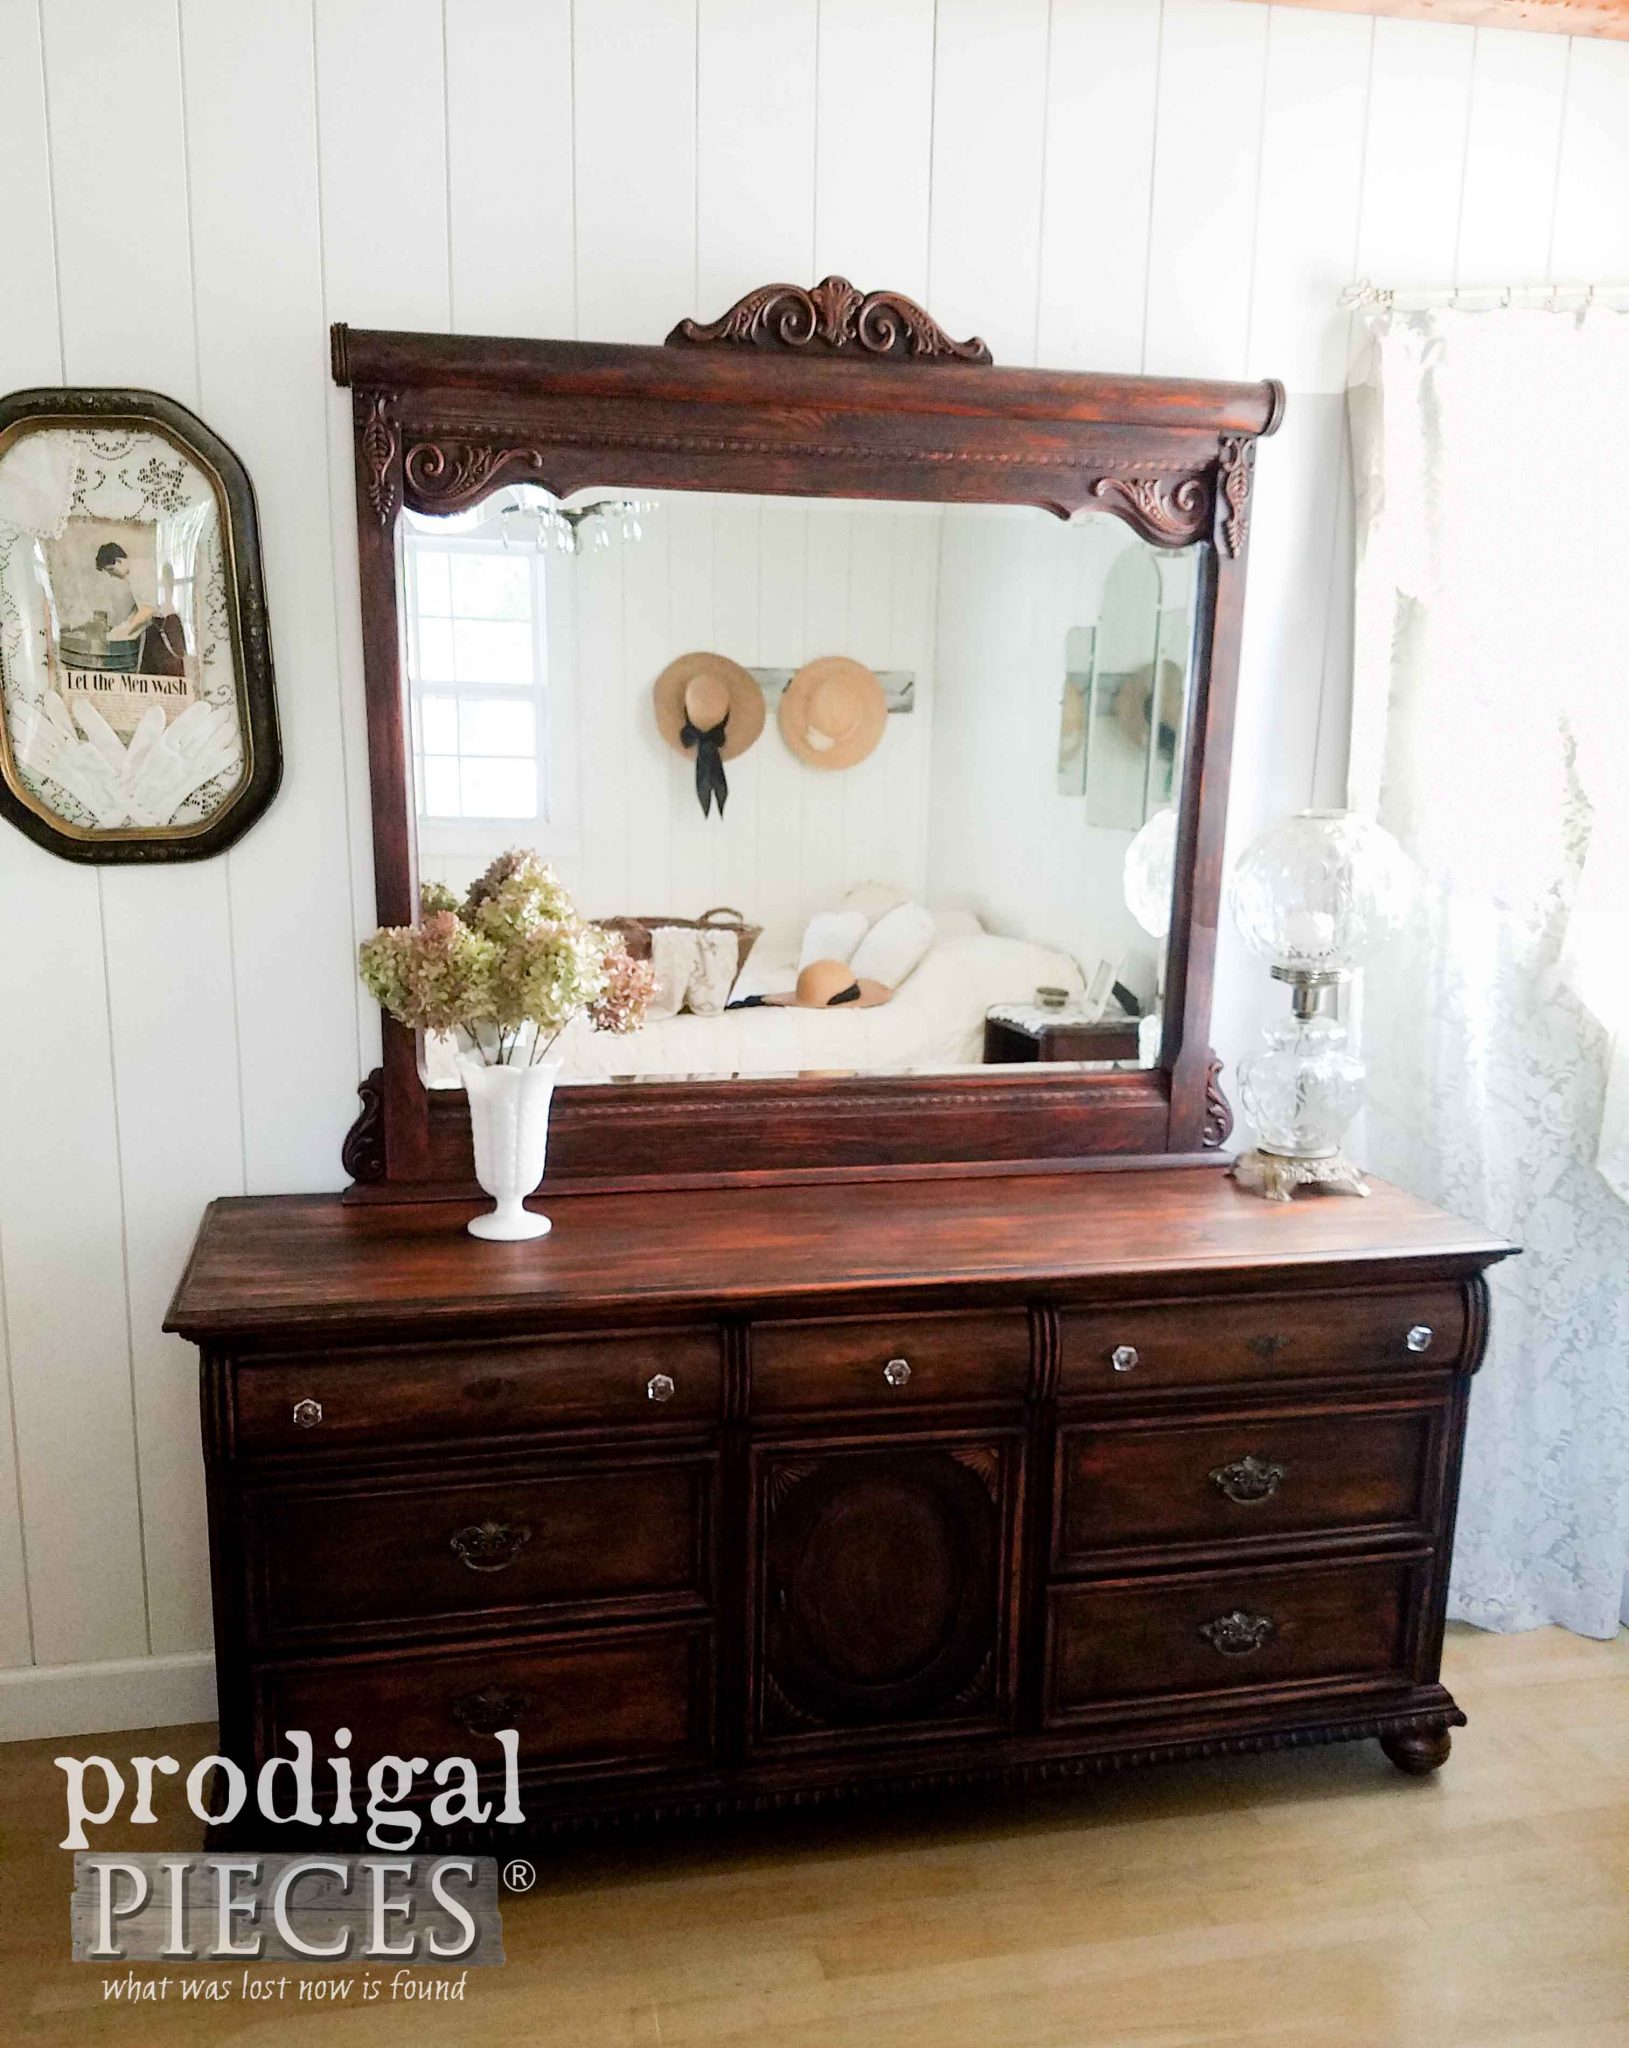 Vintage Lexington Oak Triple Dresser Refinished with a New Look by Prodigal Pieces | Get the details at prodigalpieces.com